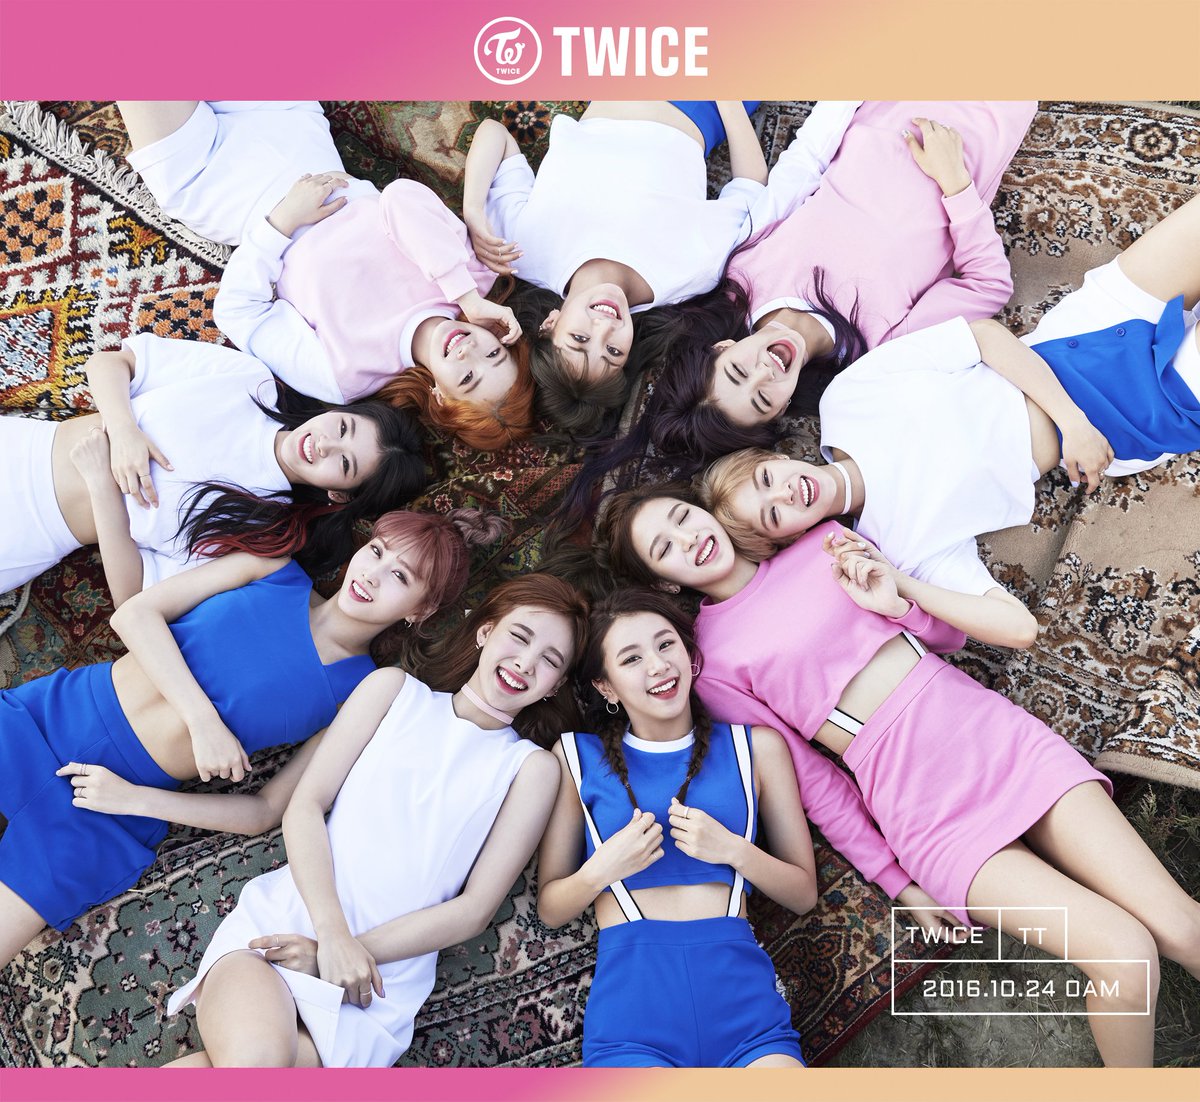 Twice Twice 3rd Mini Album Twicecoaster Lane 1 Photo 1 Twice Tt 16 10 24 0am Twice 트와이스 Tt 티티